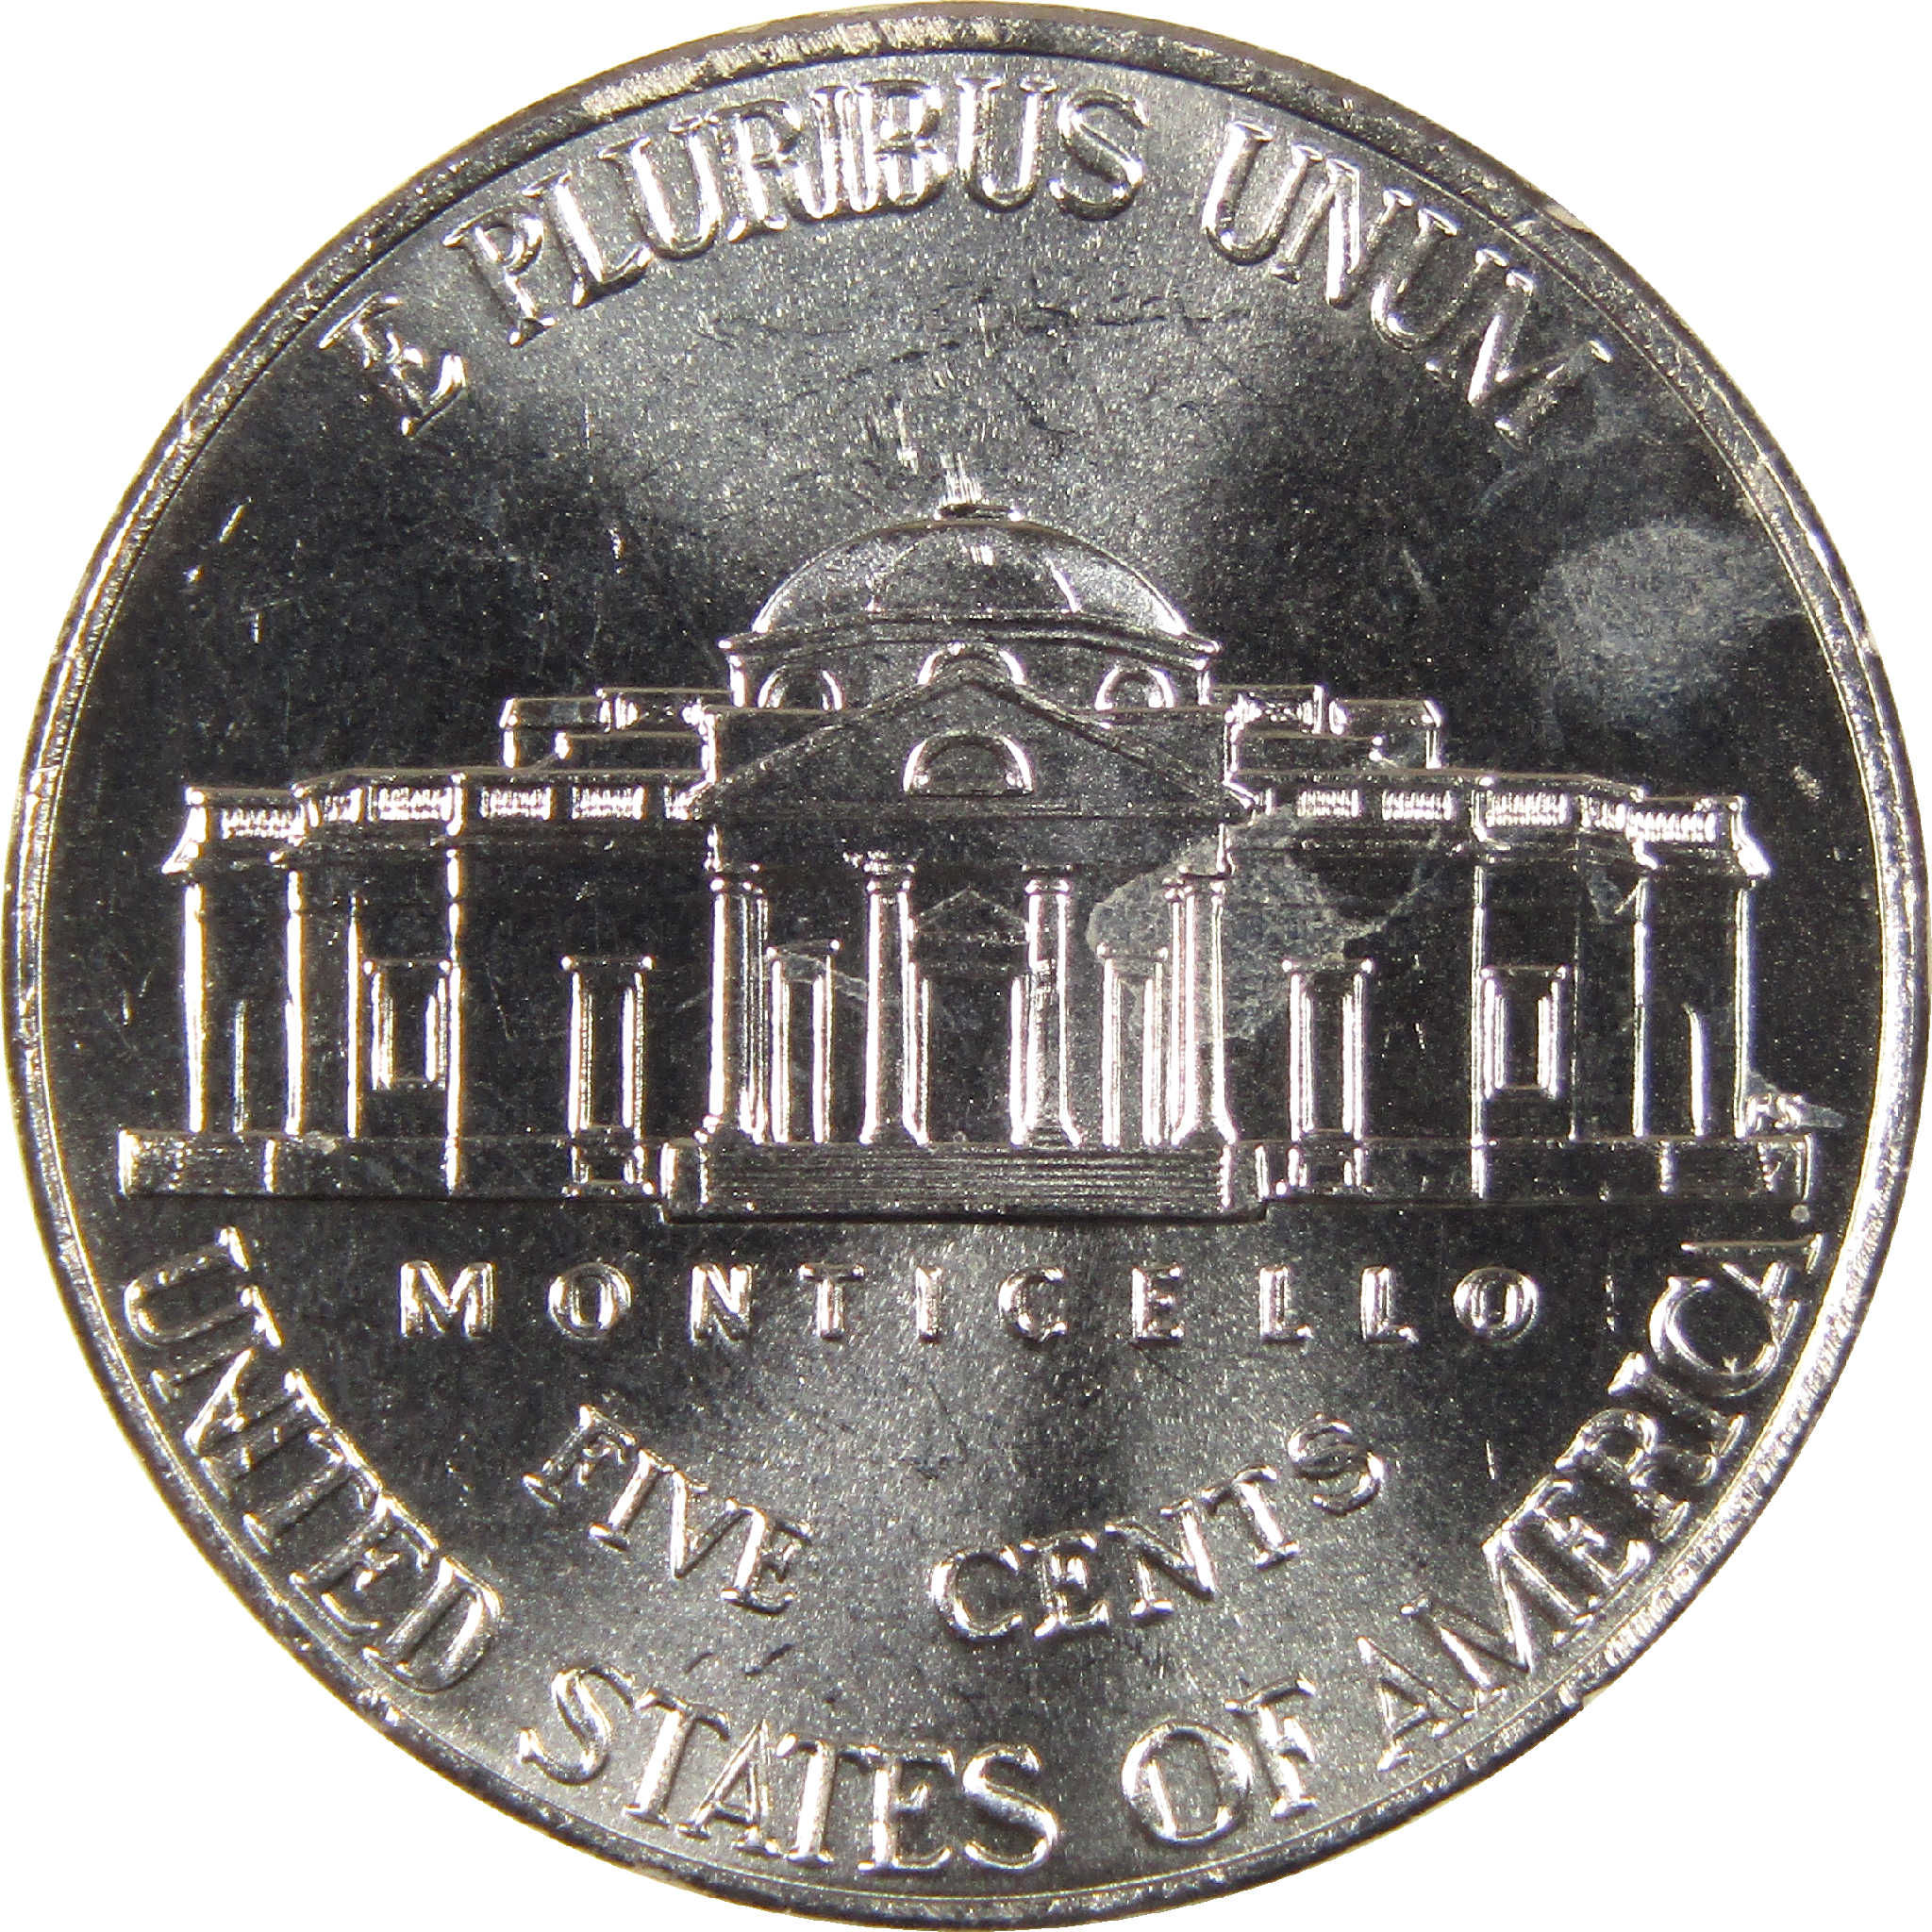 2014 D Jefferson Nickel Uncirculated 5c Coin